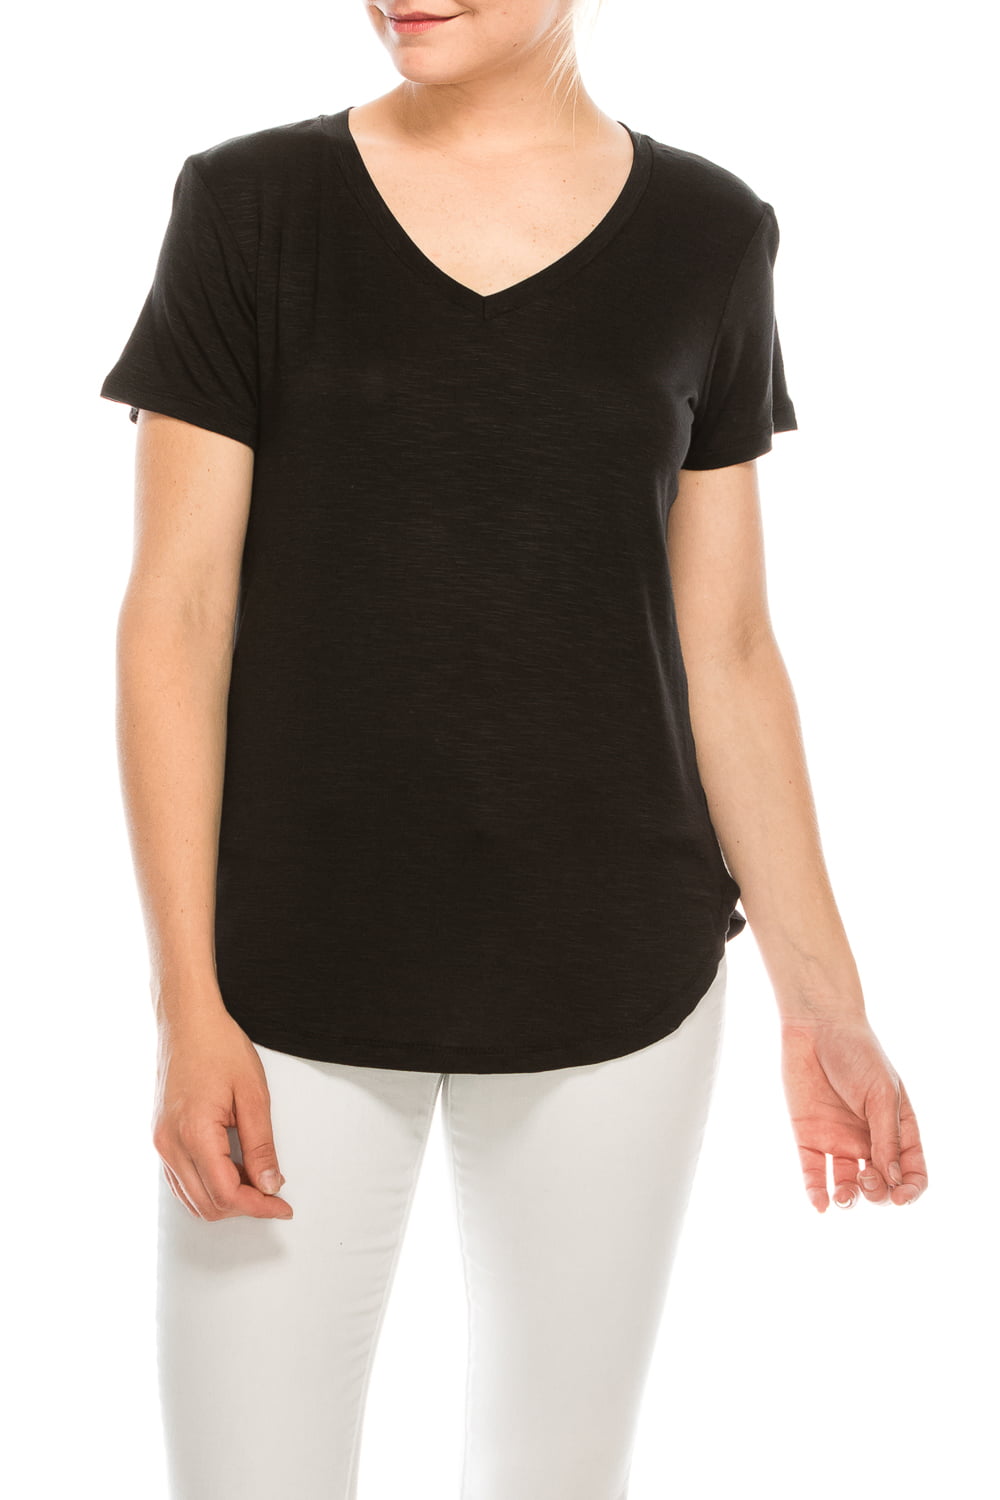 Urban Diction Modal V-Neck Women T Shirt Short Sleeve Tees Tops Regular ...